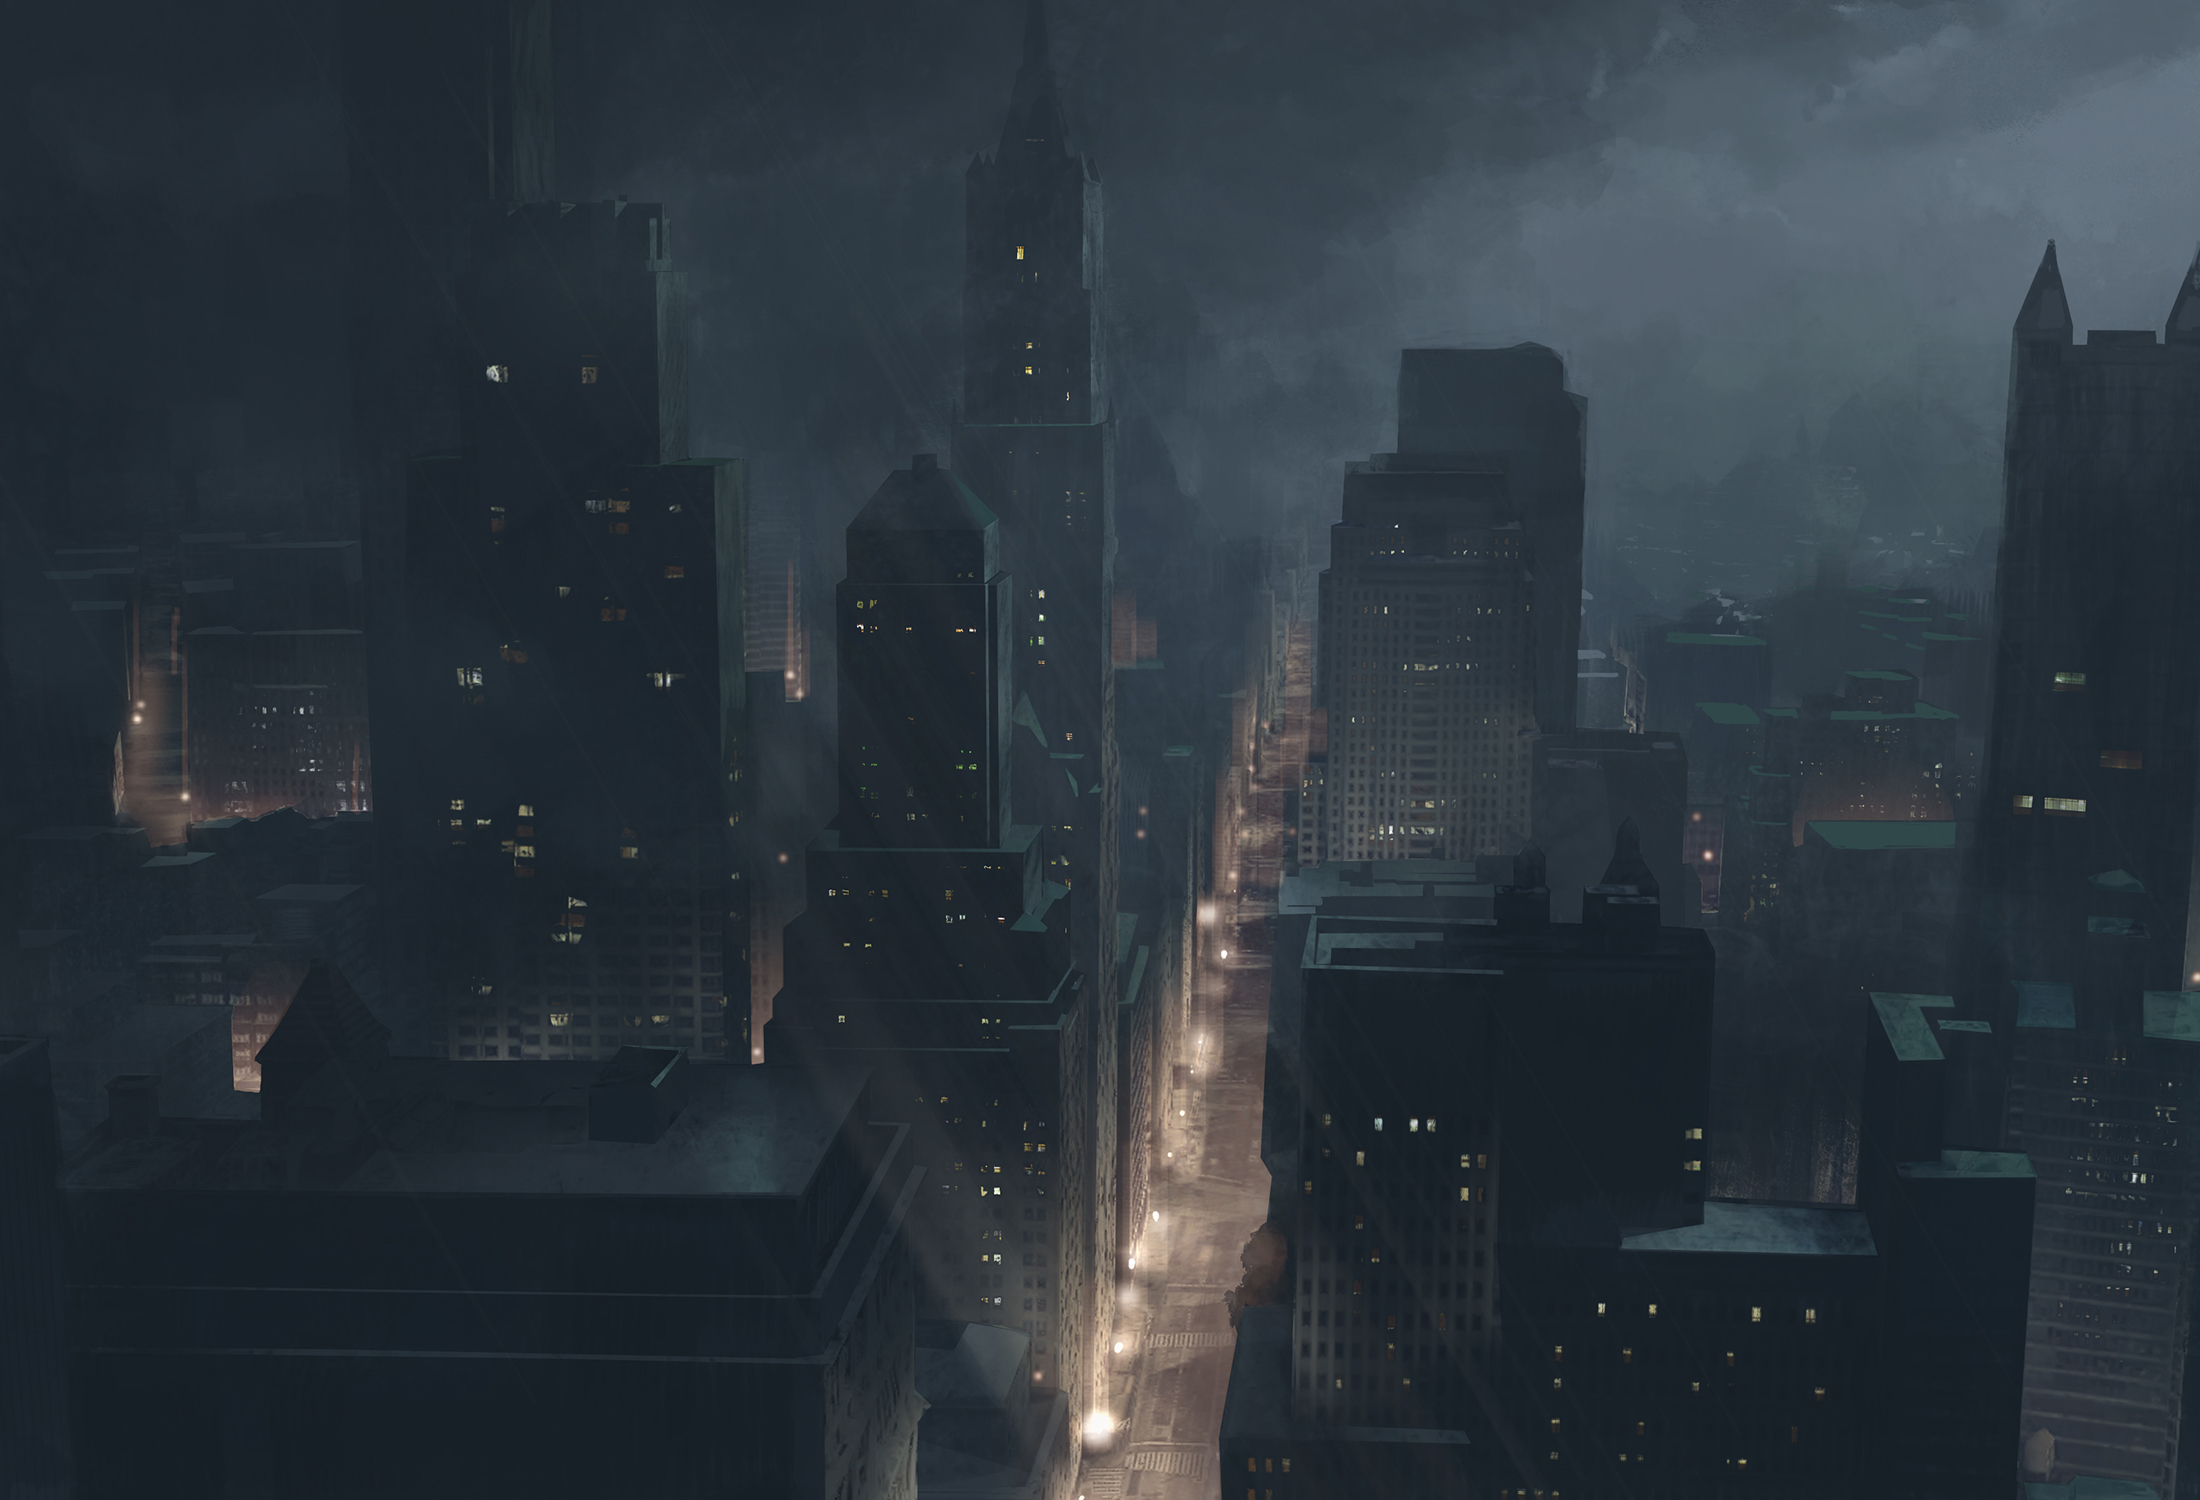 Vampire: The Masquerade - Coteries of New York no Steam